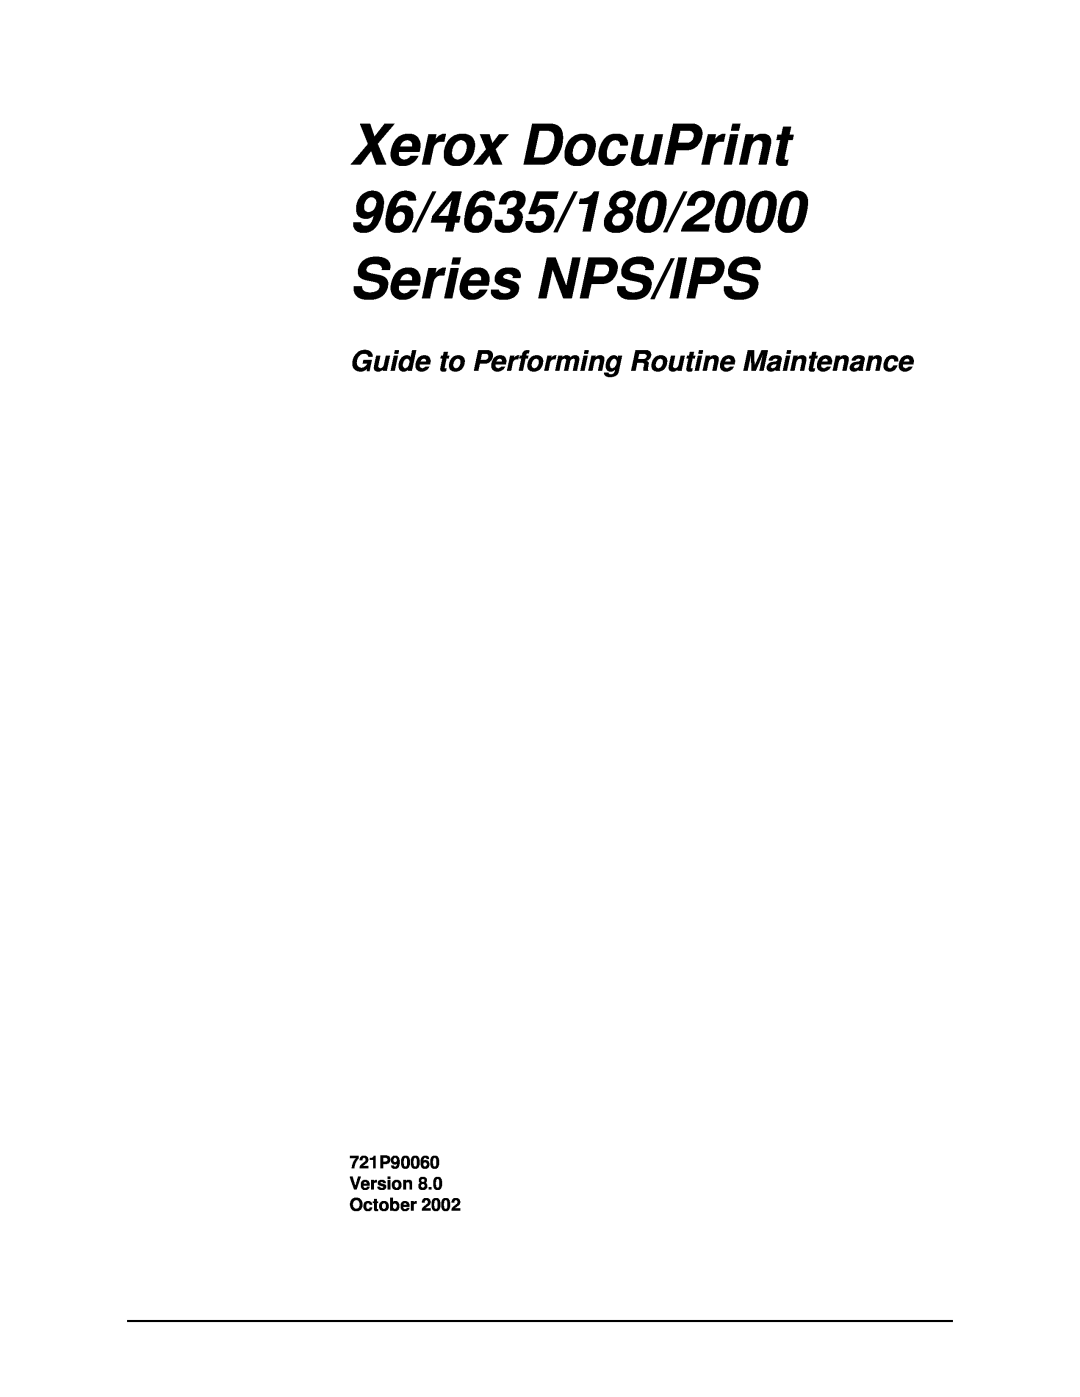 Xerox manual Xerox DocuPrint 96/4635/180/2000 Series NPS/IPS, Guide to Performing Routine Maintenance 